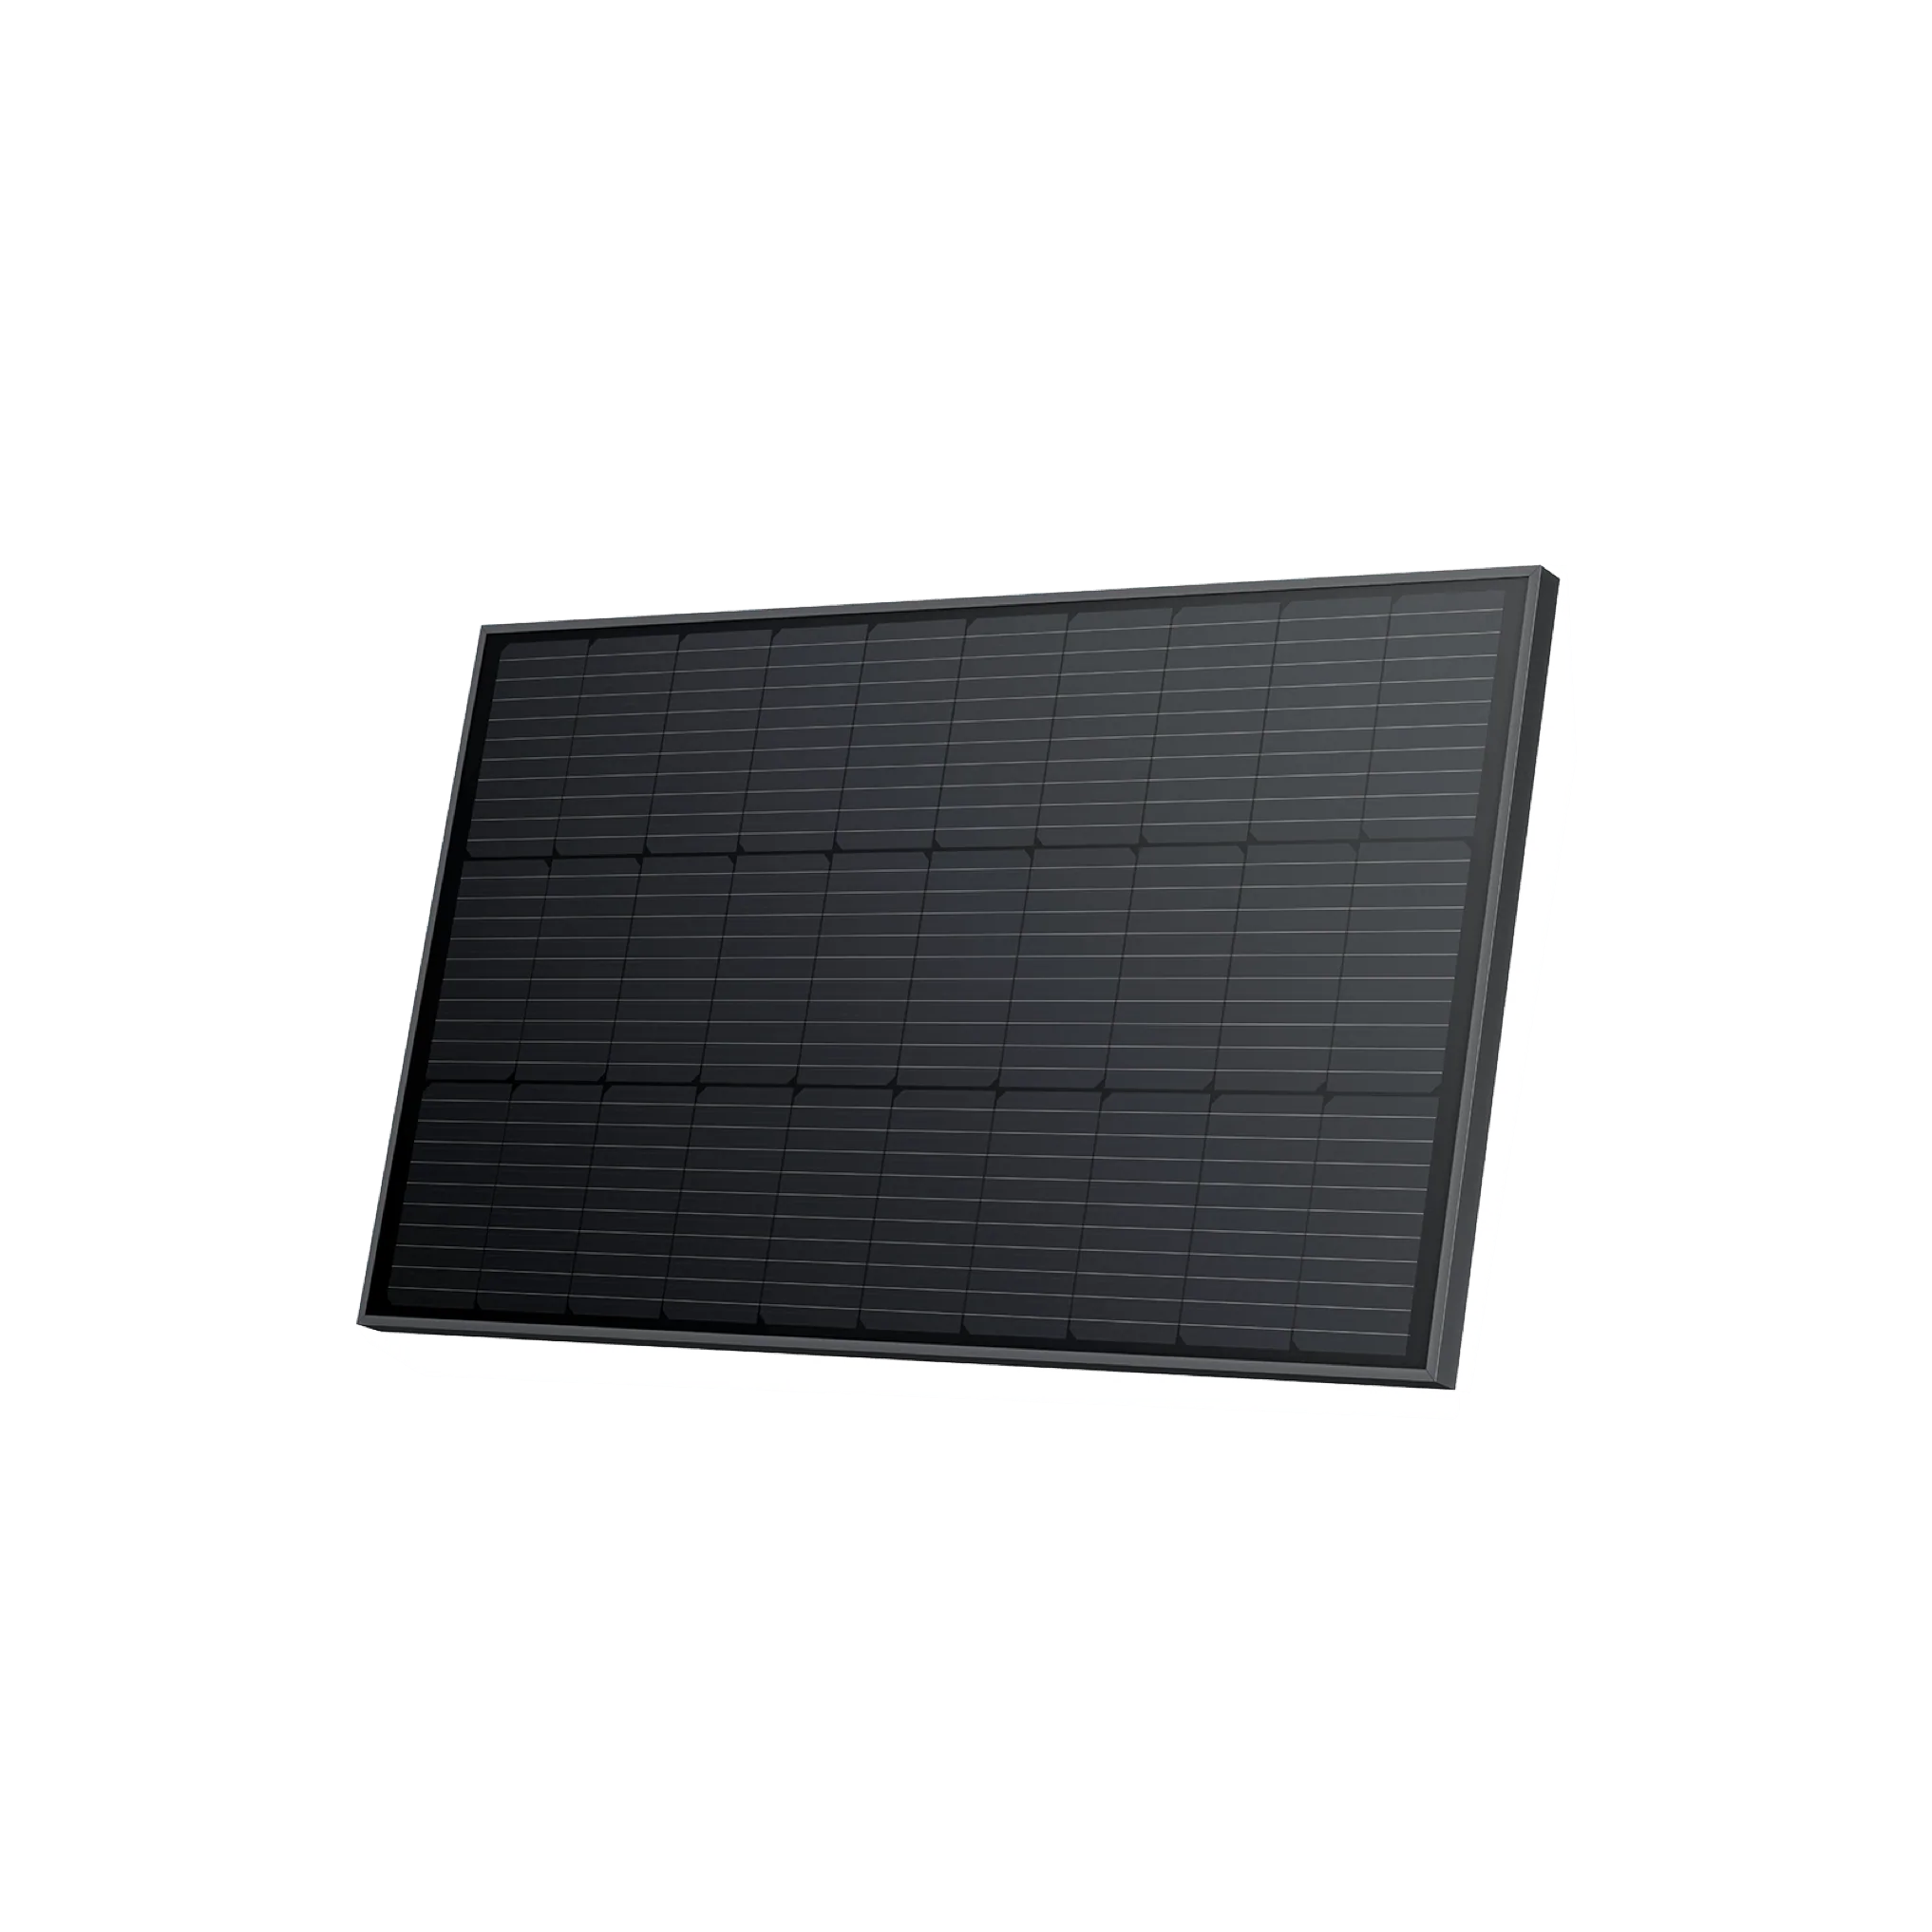 An EcoFlow 100W Rigid Solar Panel, black, on a white background.